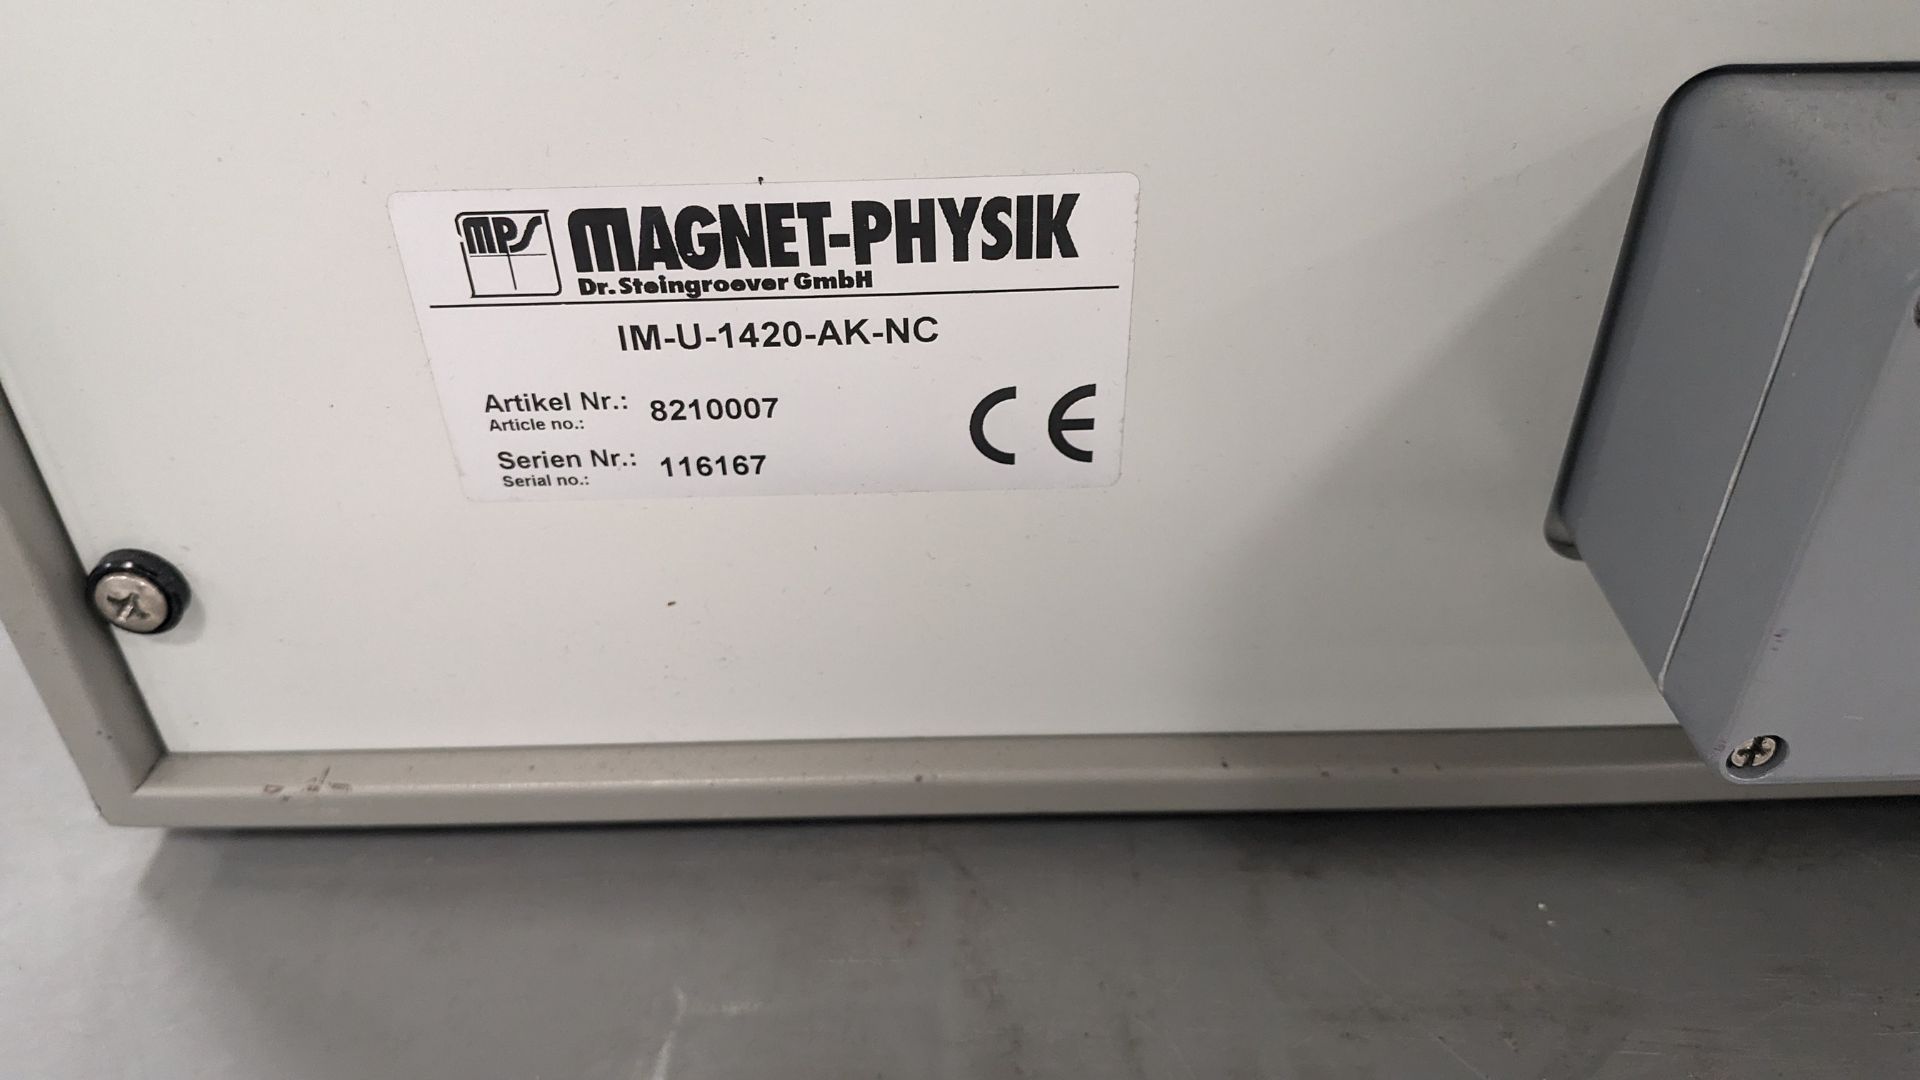 Magnet-Physik U-series impulse magnetiser S/N: 116167 - Image 2 of 2